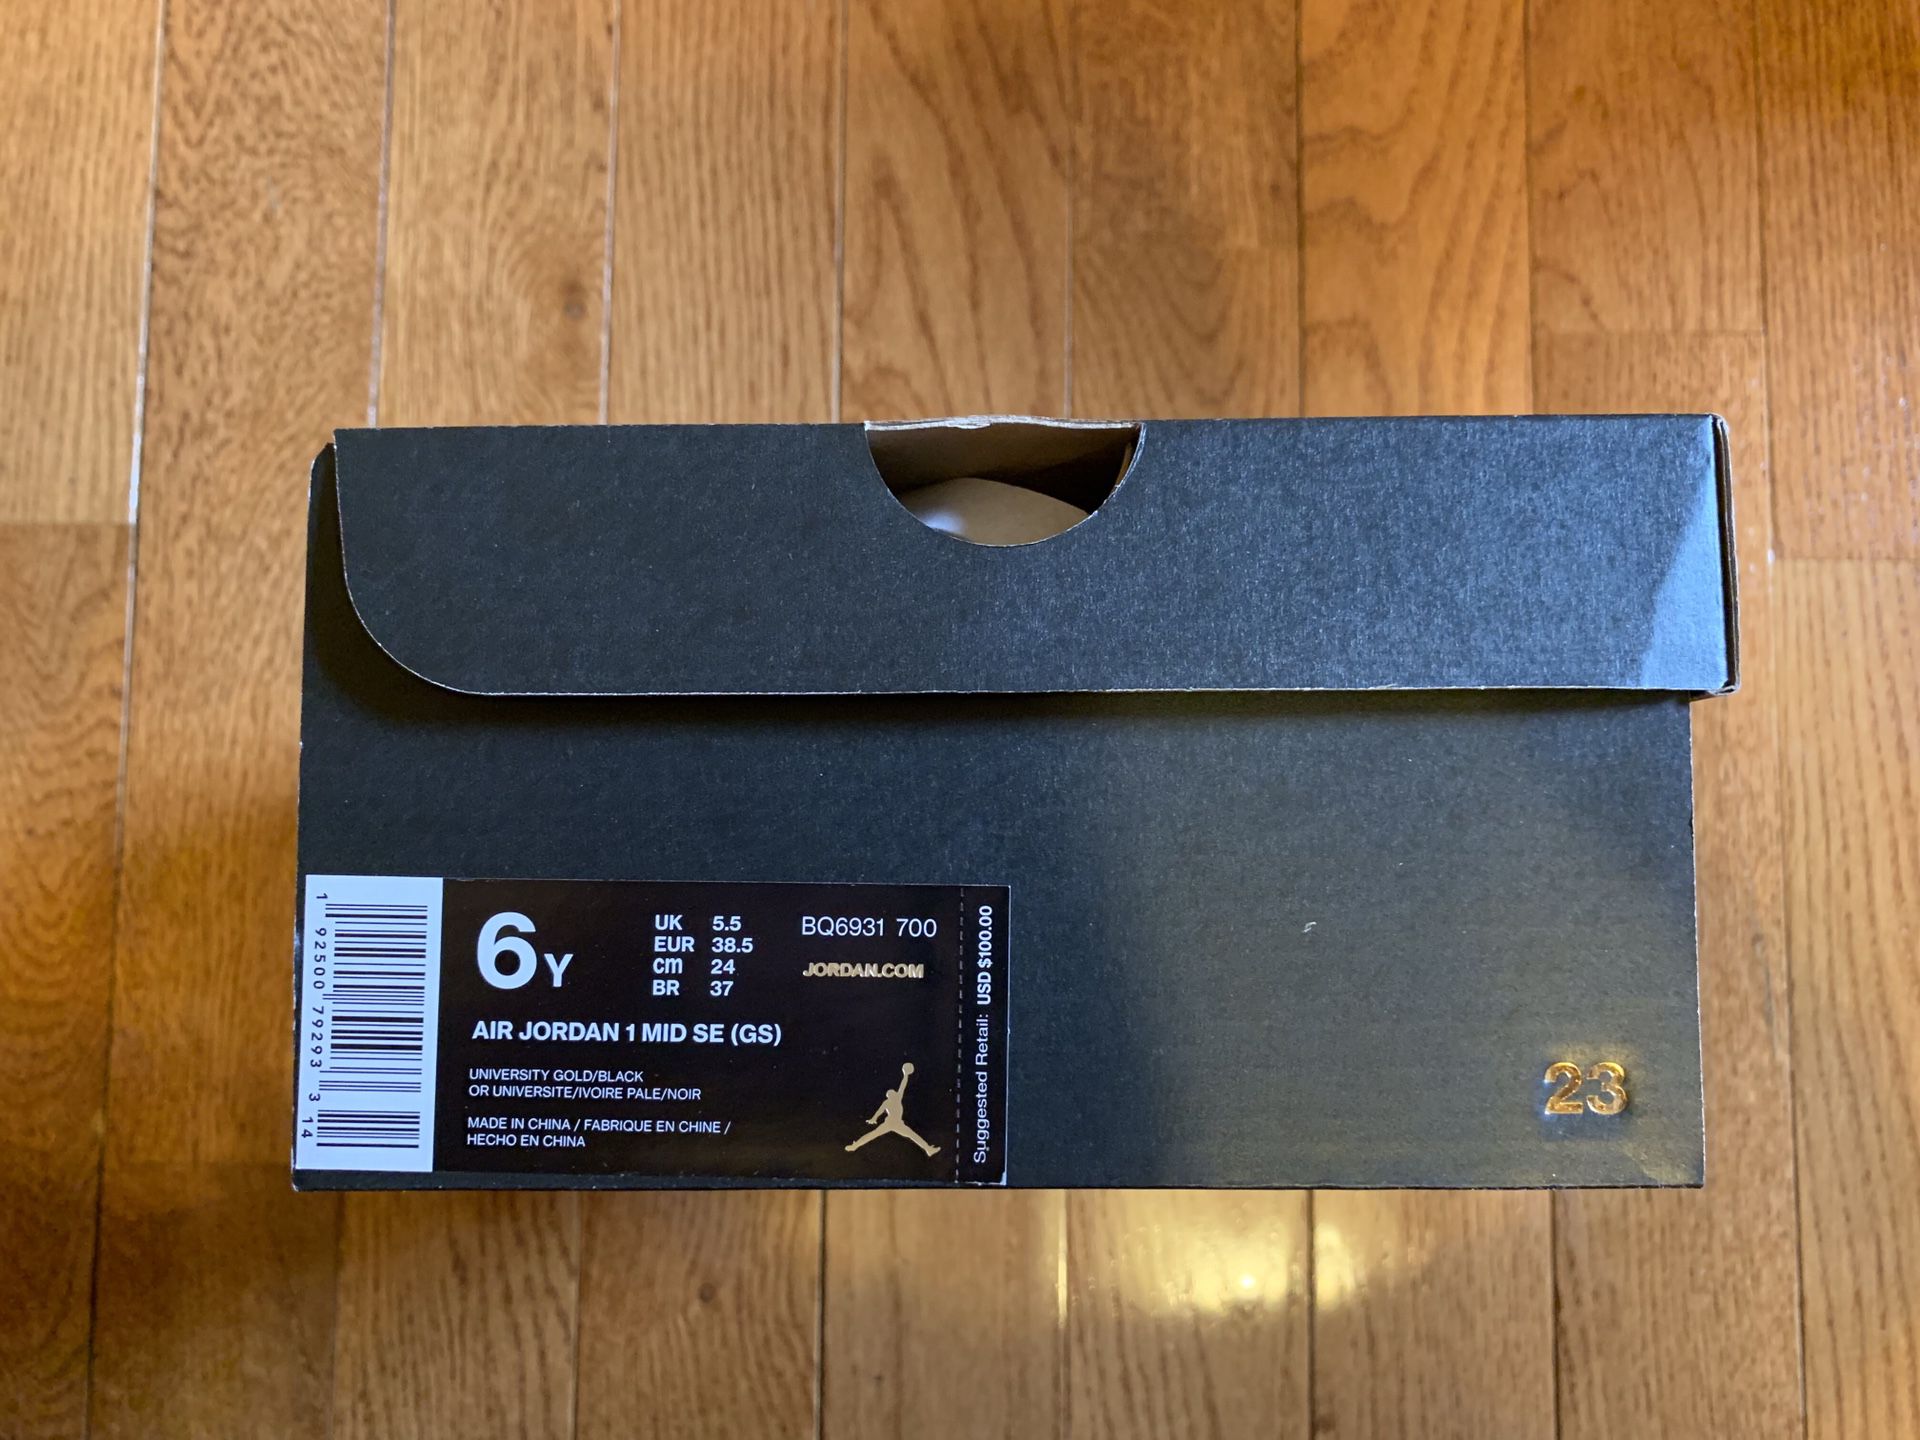 Air Jordan 1 mid SE sizes 6.5 & 6y